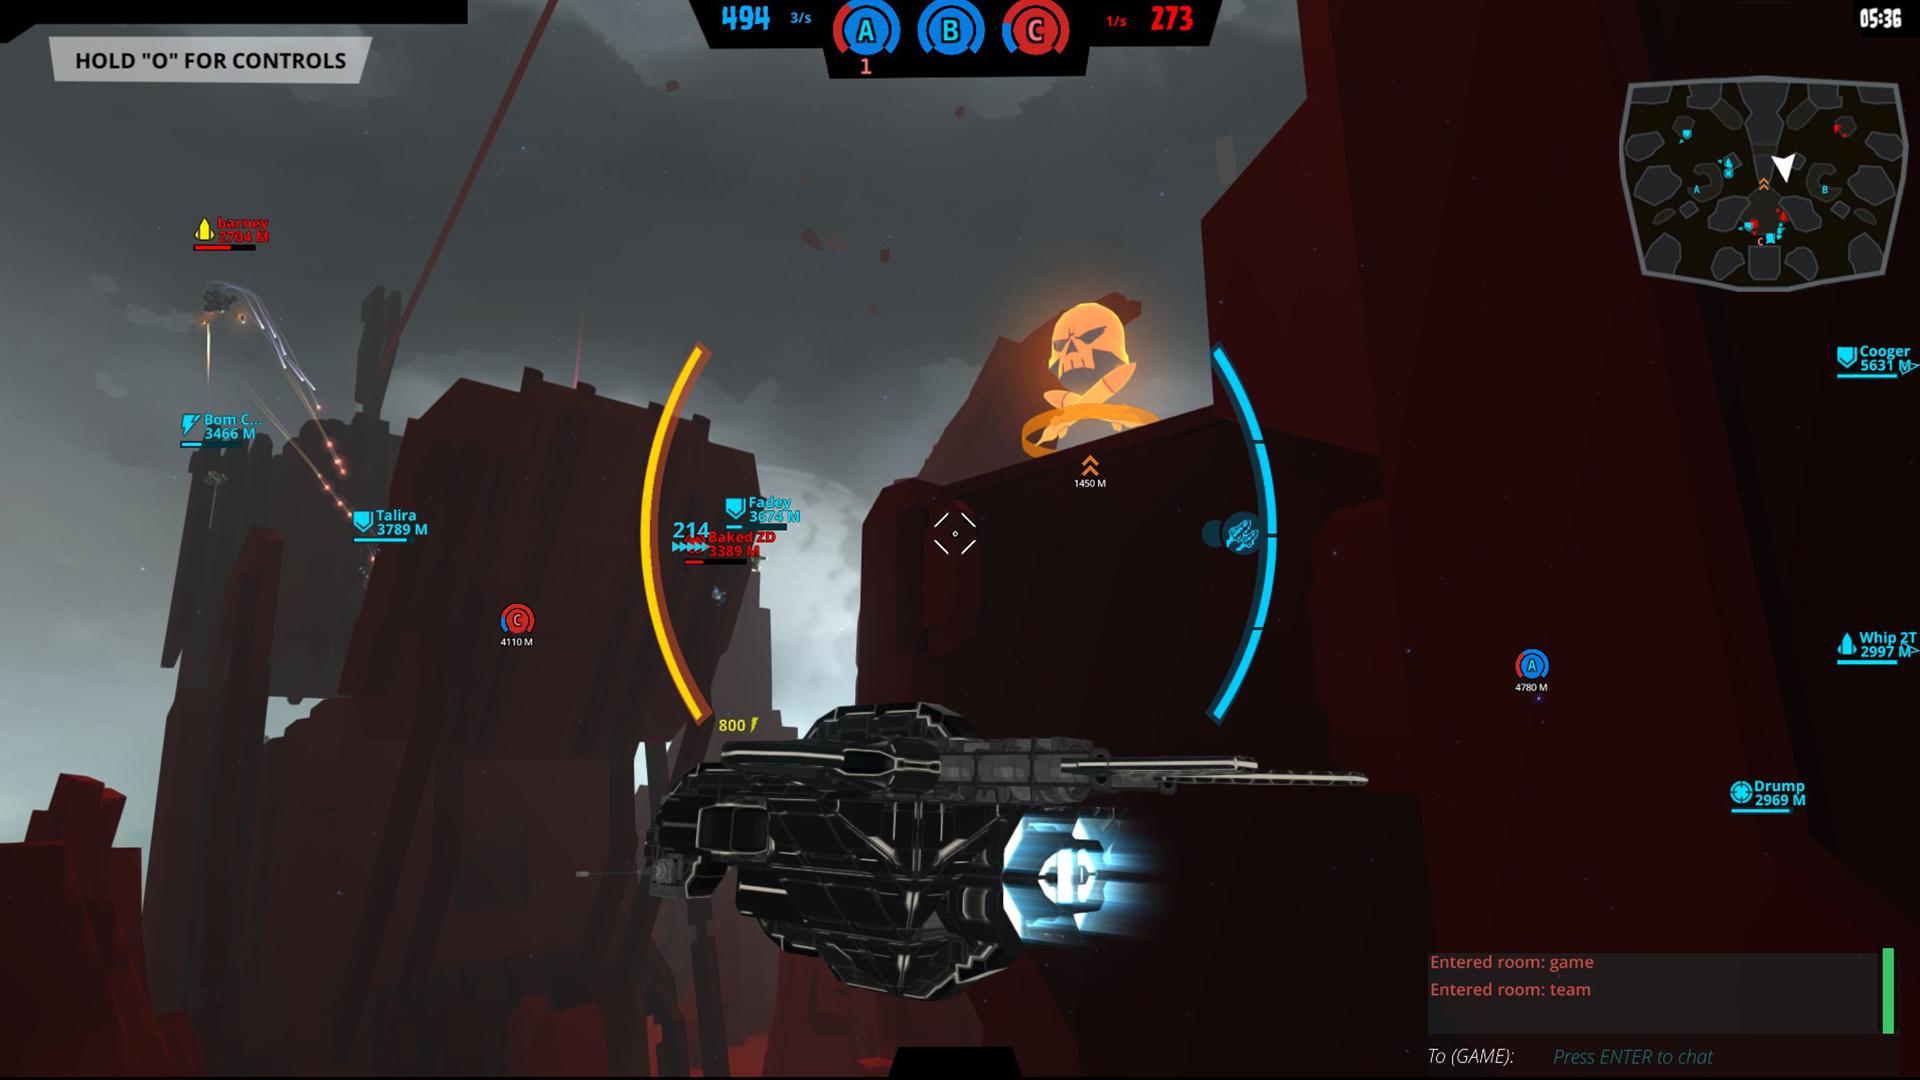 Screenshot №10 from game Galactic Junk League